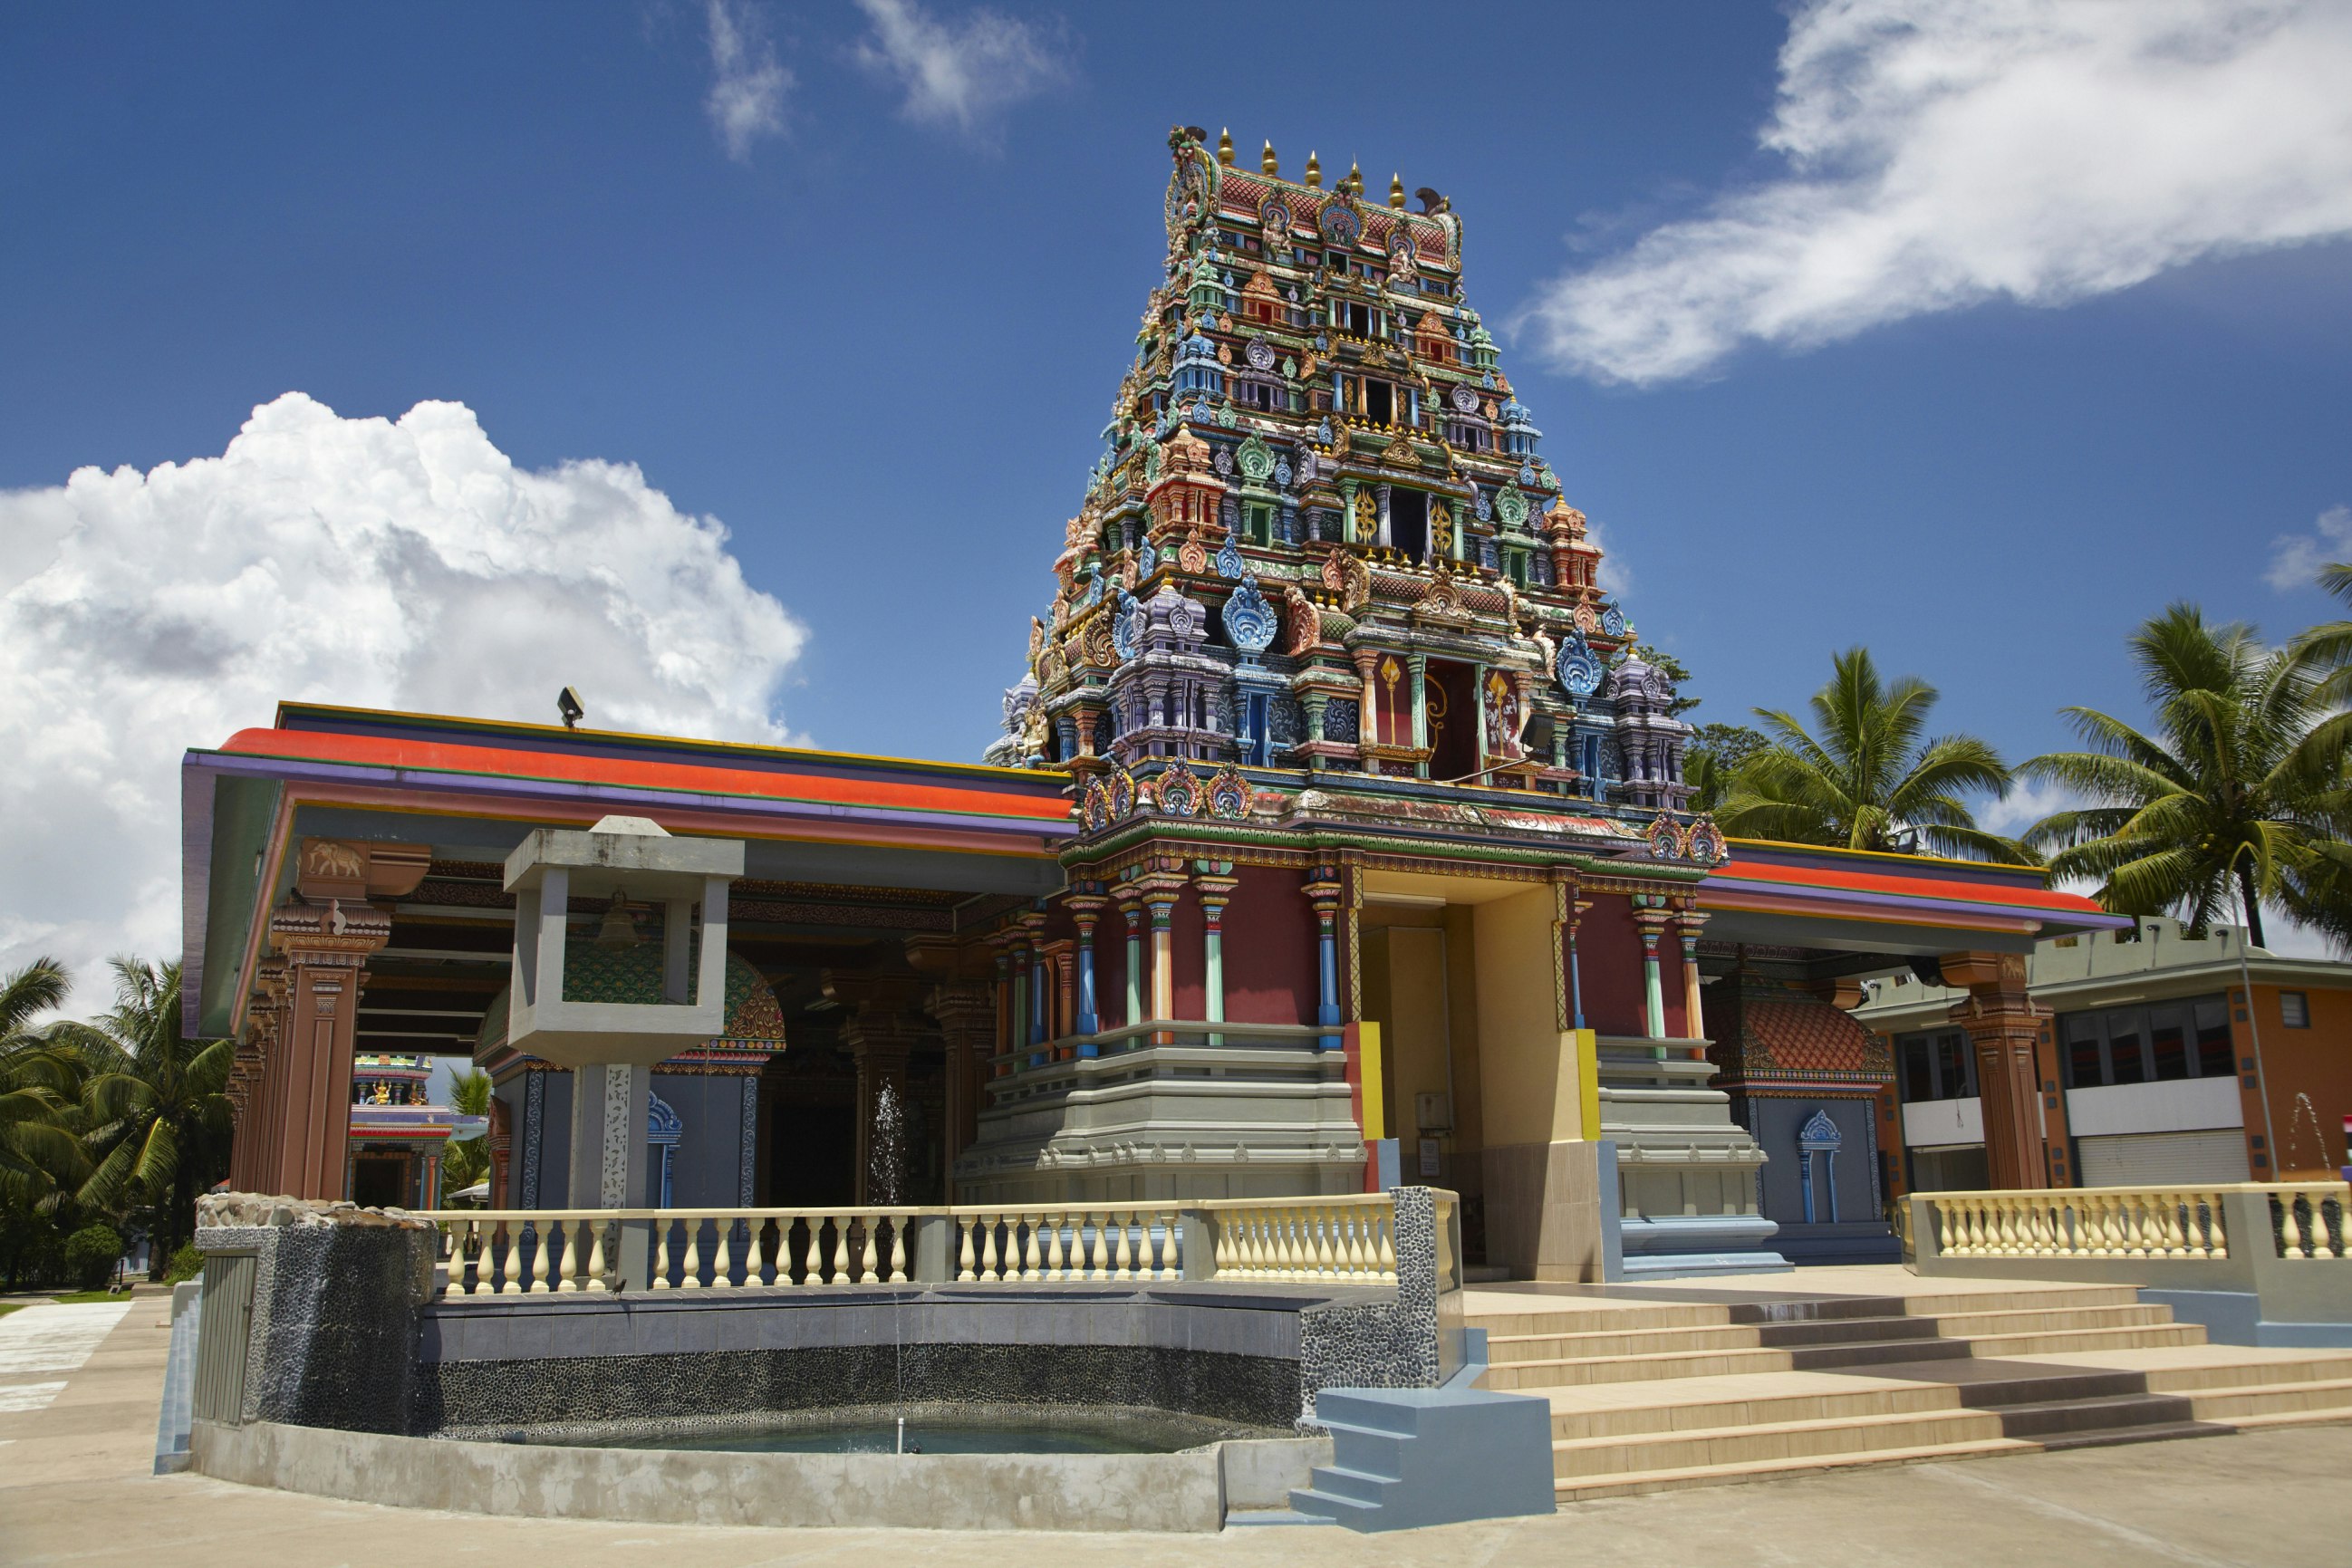 Exterior of colorful Sri Siva Subramaniya Swami Temple